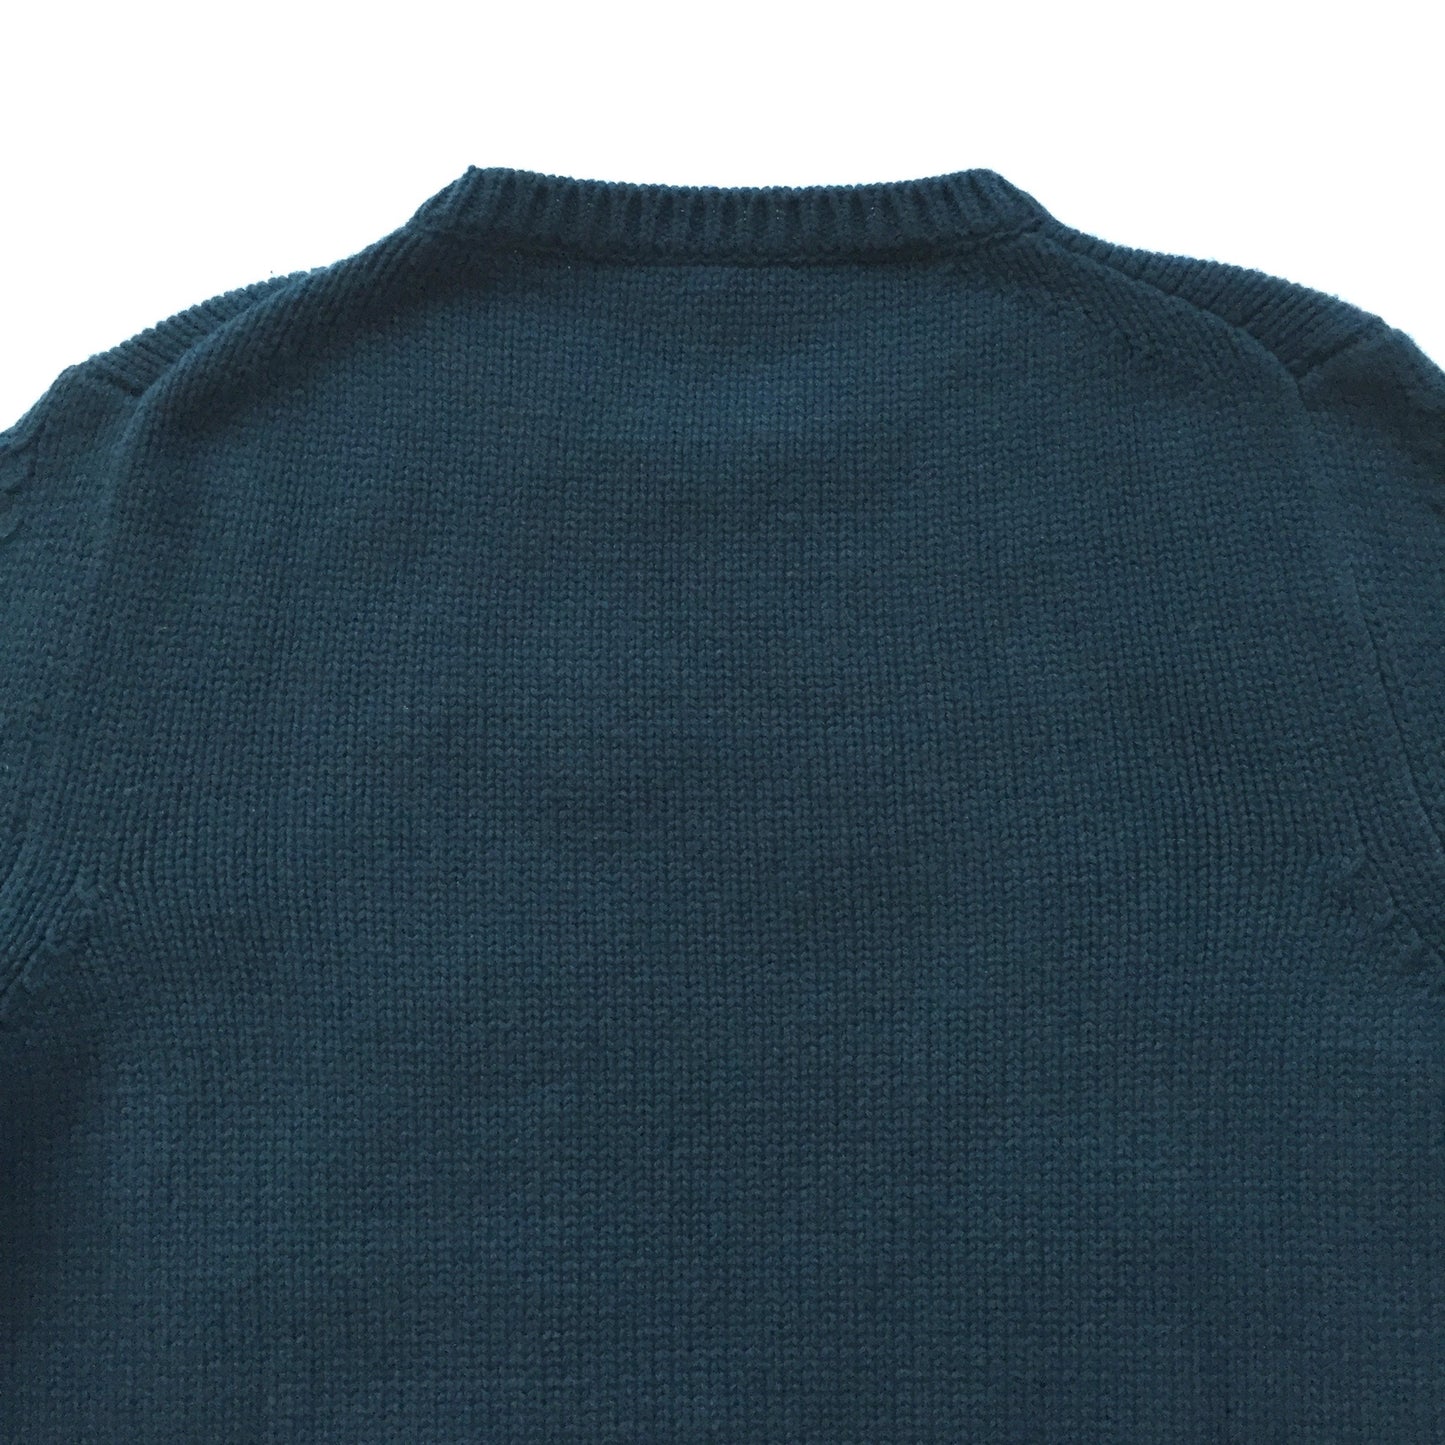 Yang Li - Teal Runway Patch Sweater